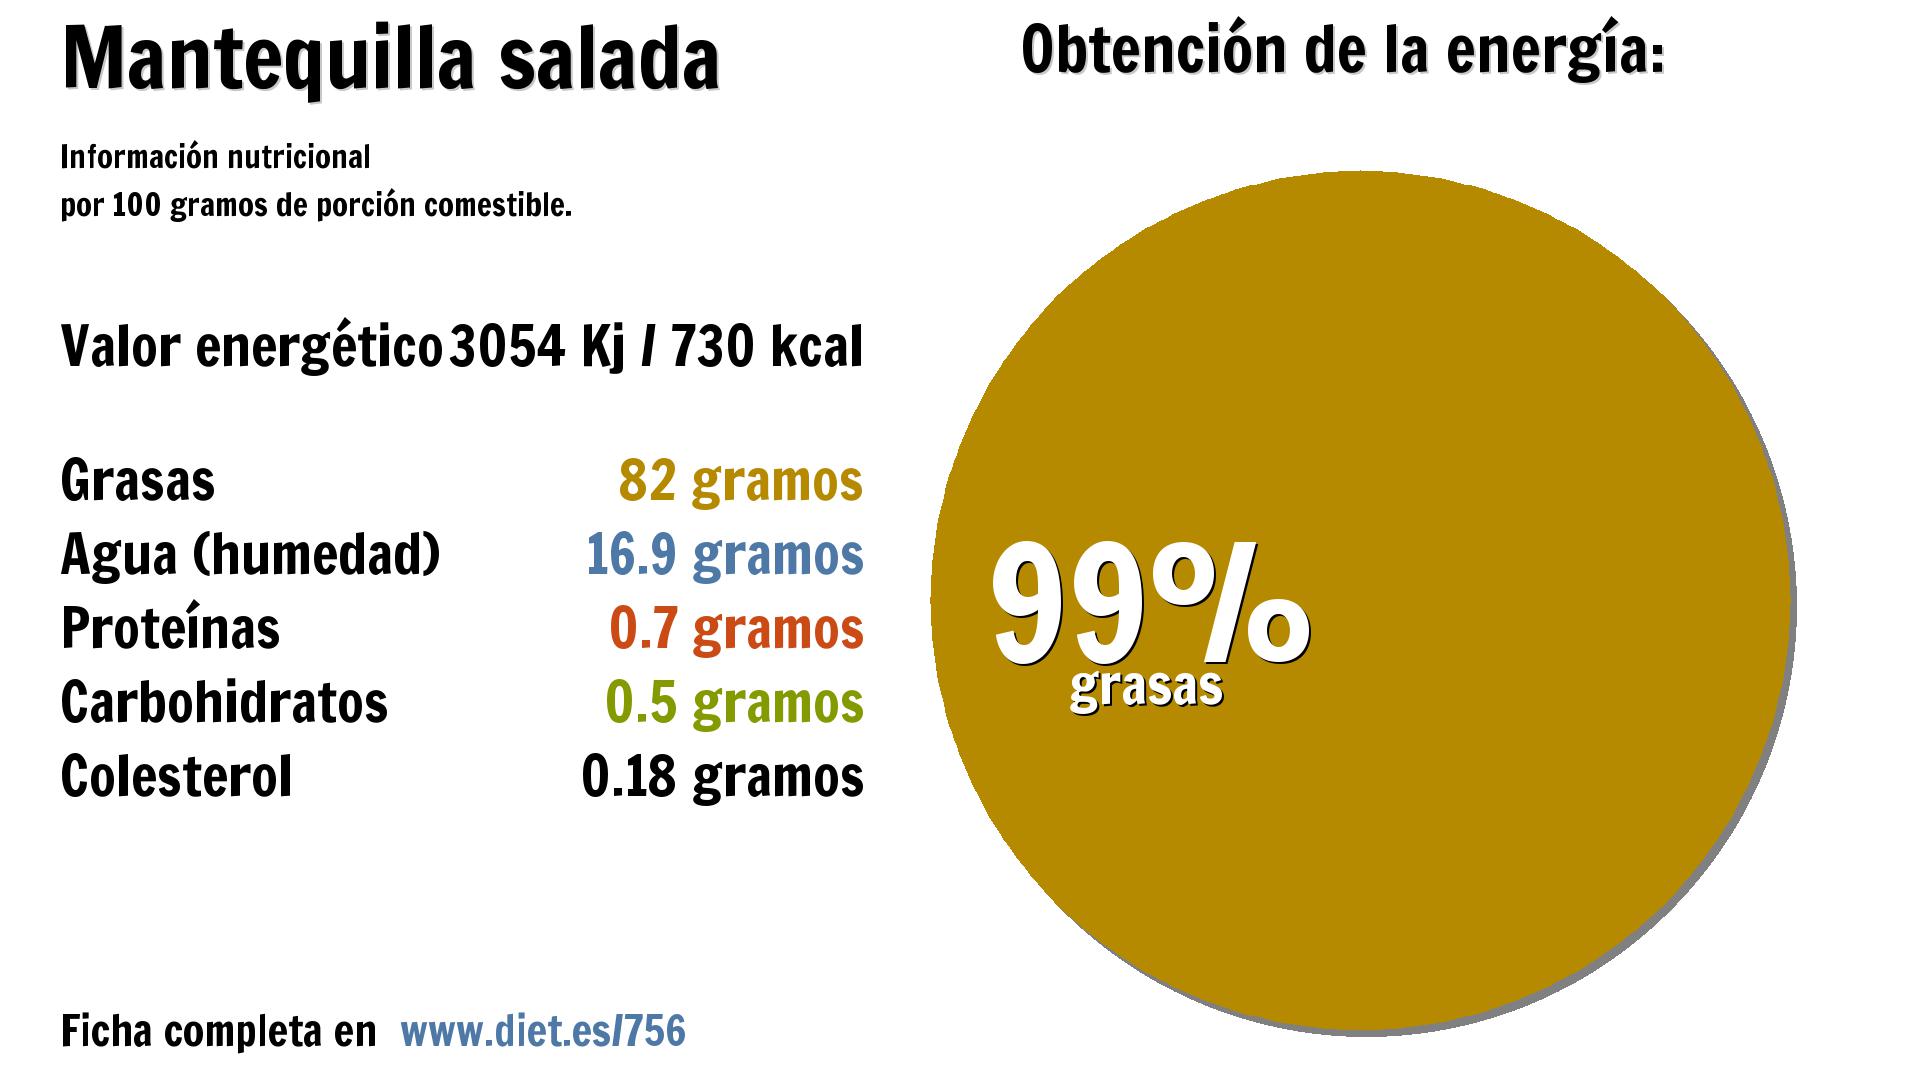 Mantequilla salada: energía 3054 Kj, grasas 82 g., agua 17 g., proteínas 1 g. y carbohidratos 1 g.